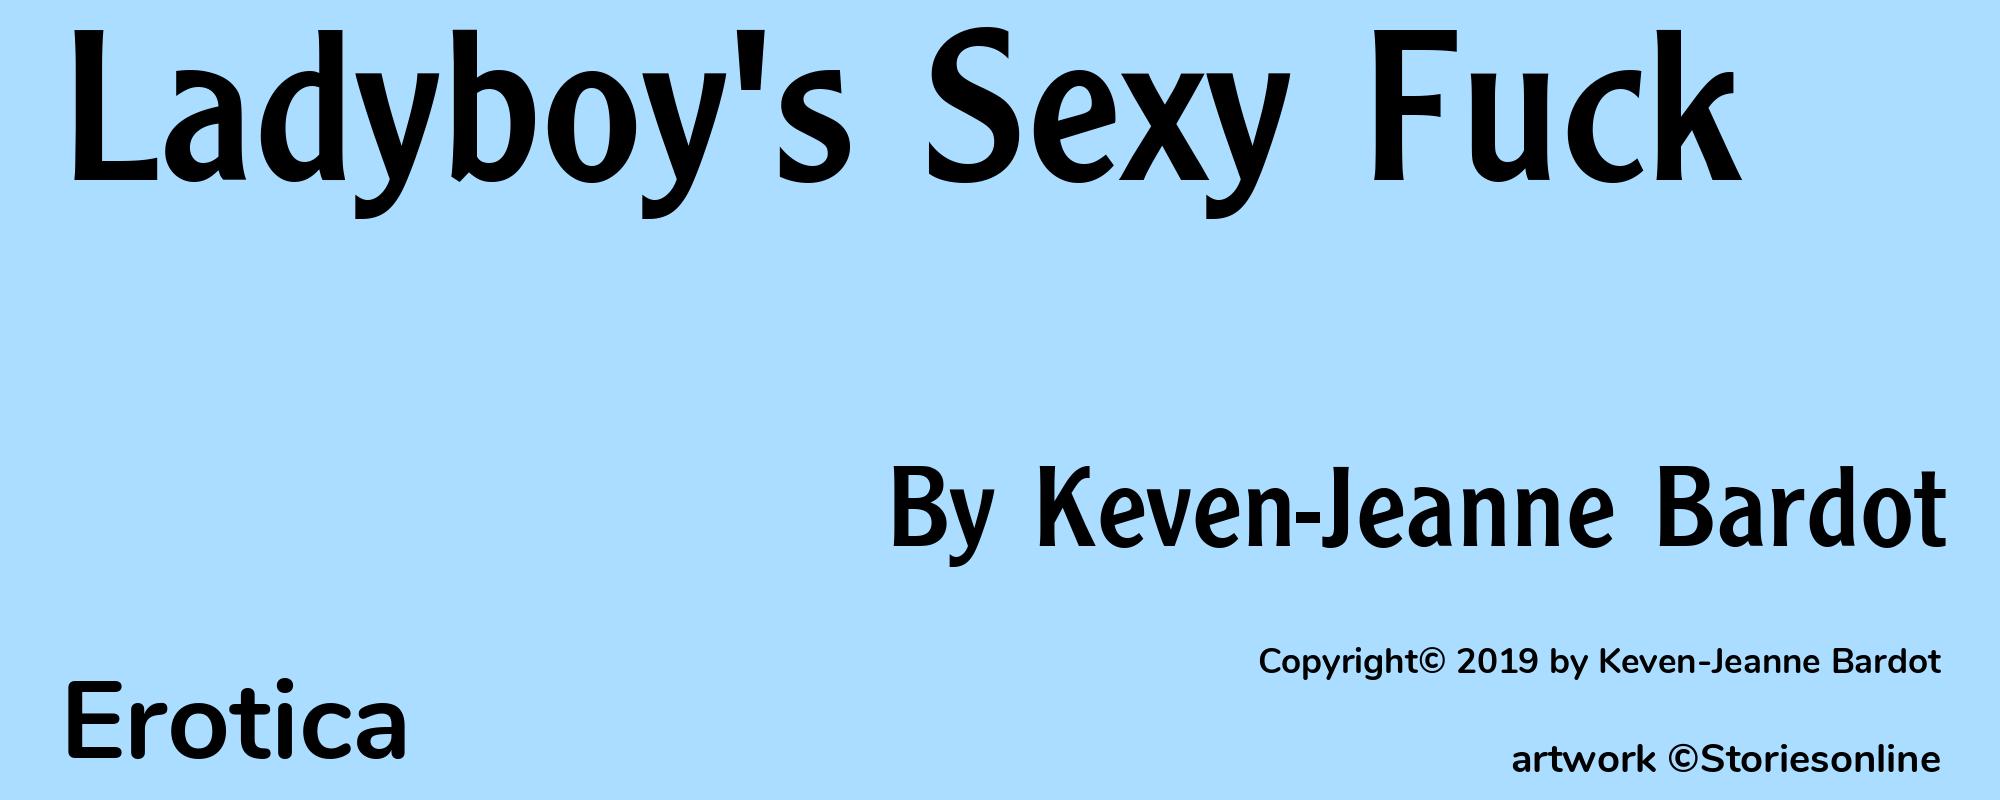 Ladyboy's Sexy Fuck - Cover